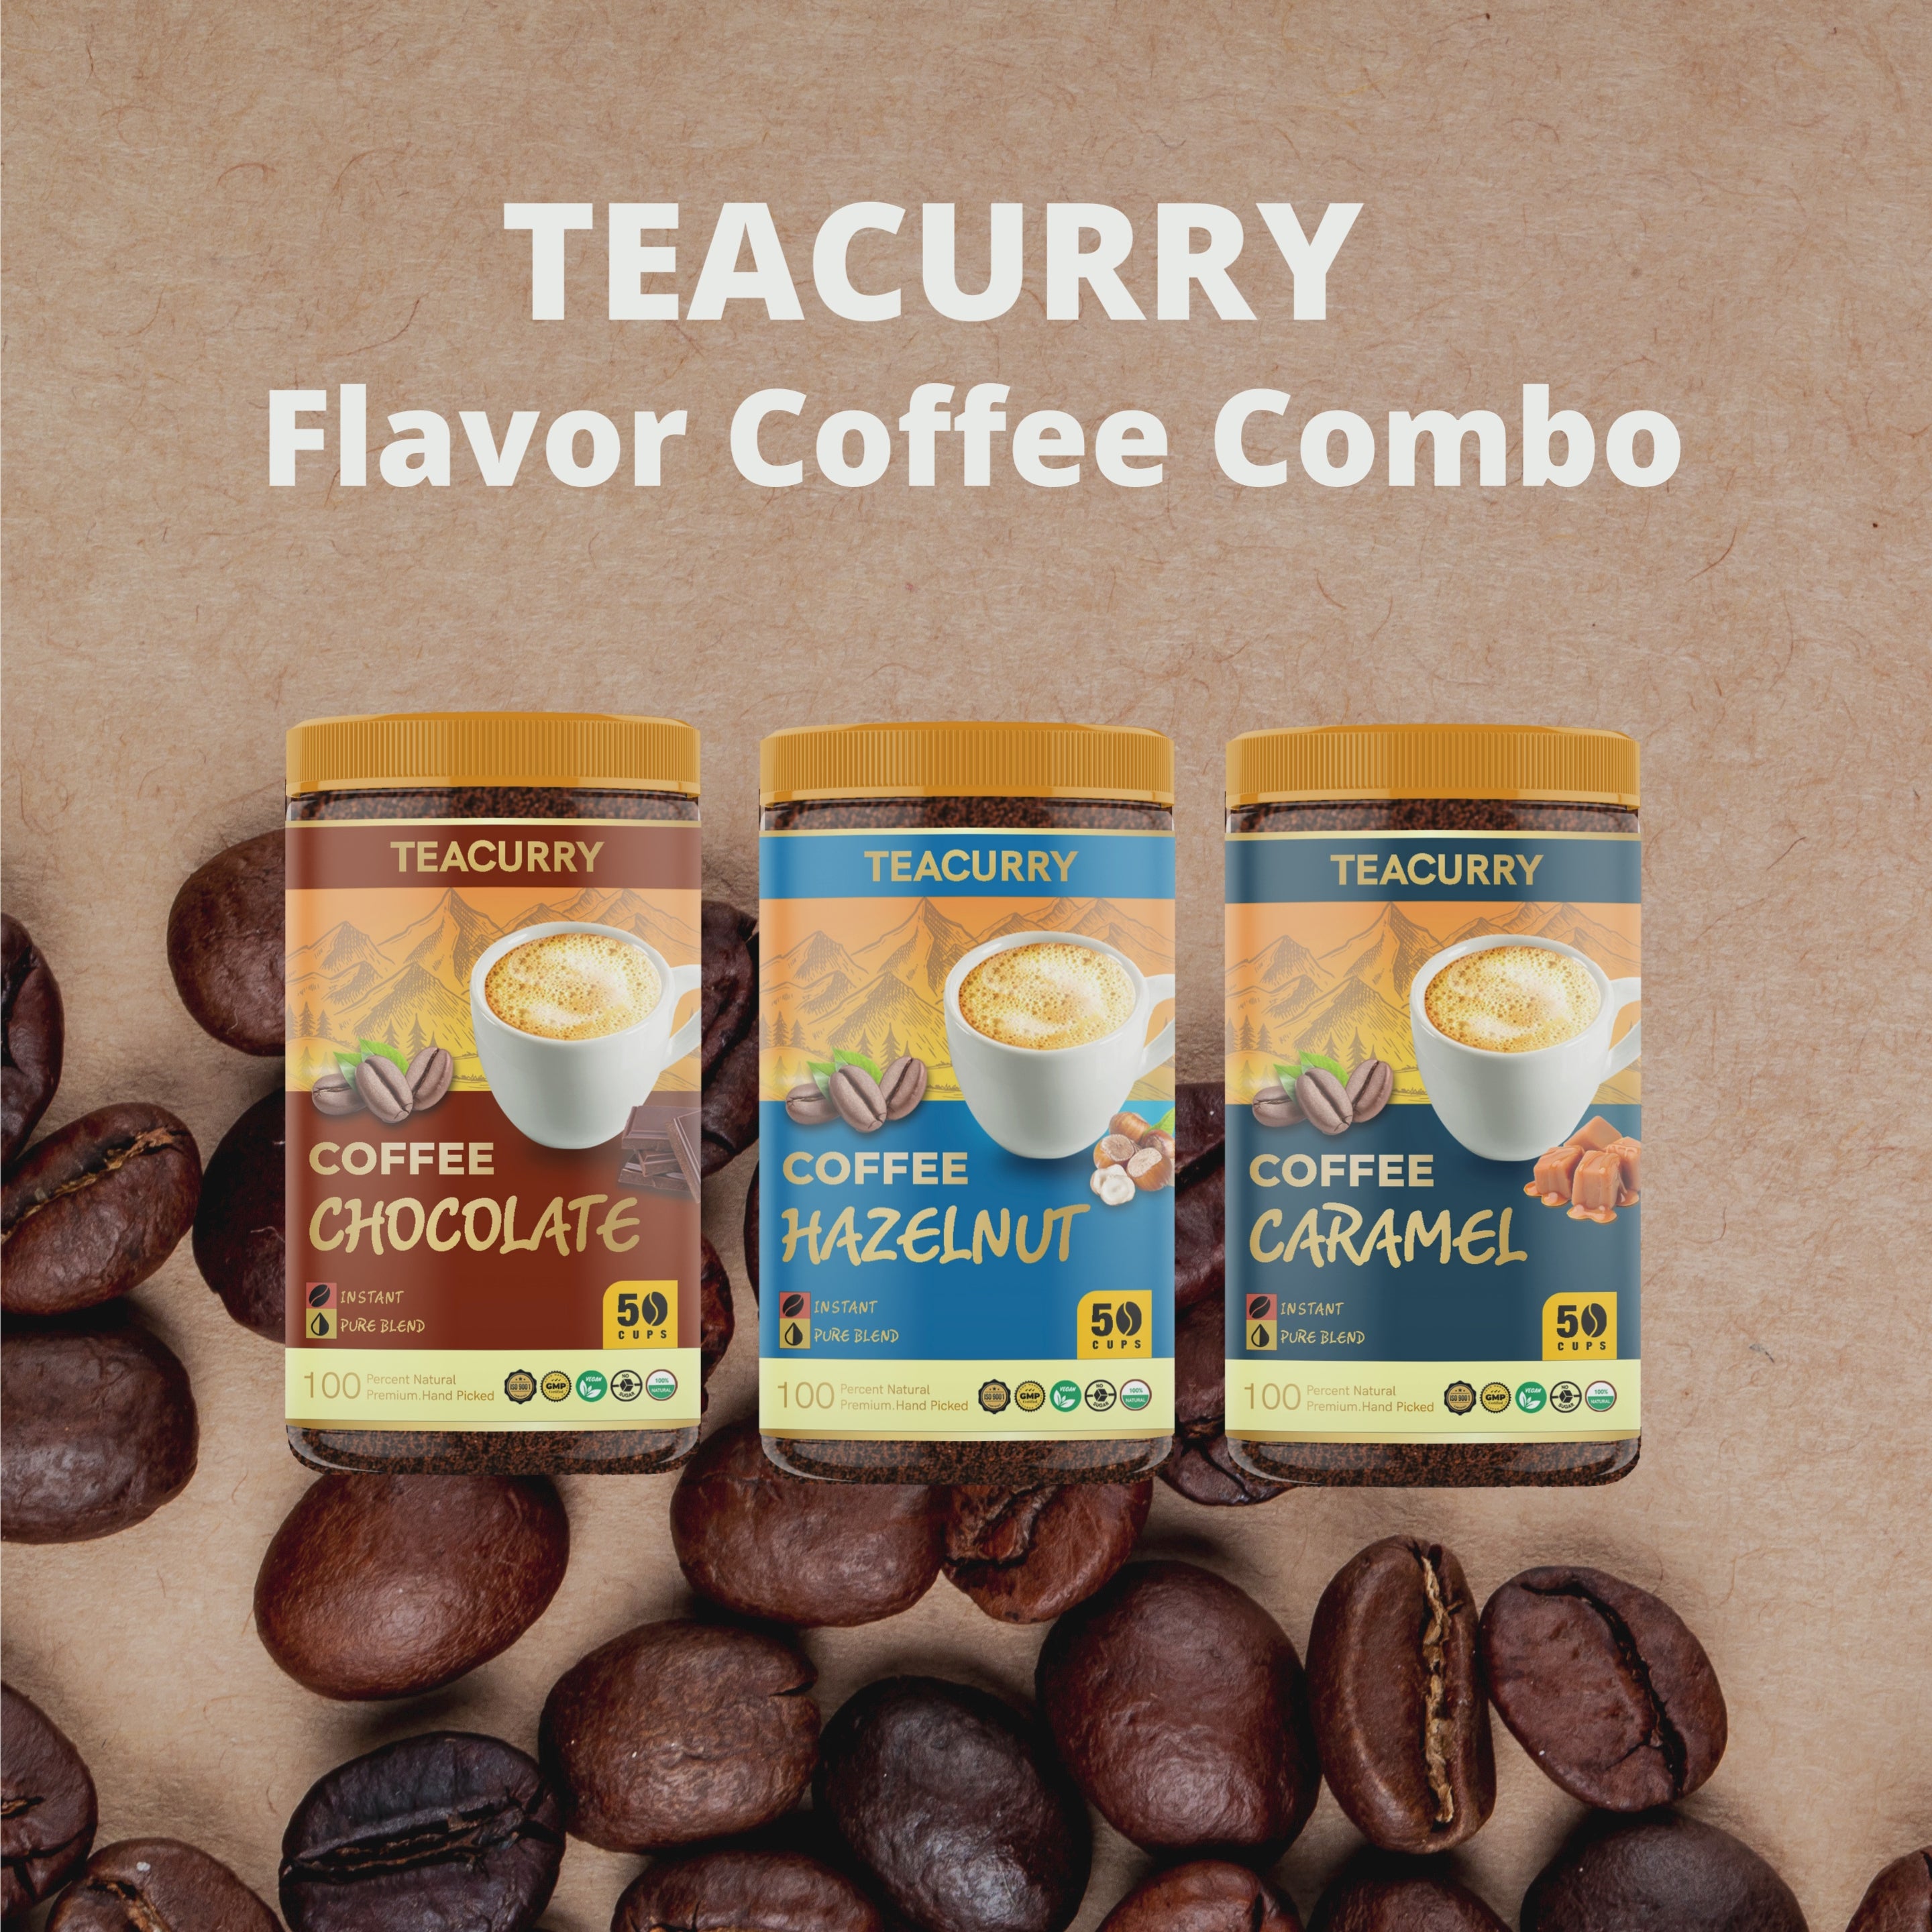 TEACURRY Flavor Coffee Combo Video